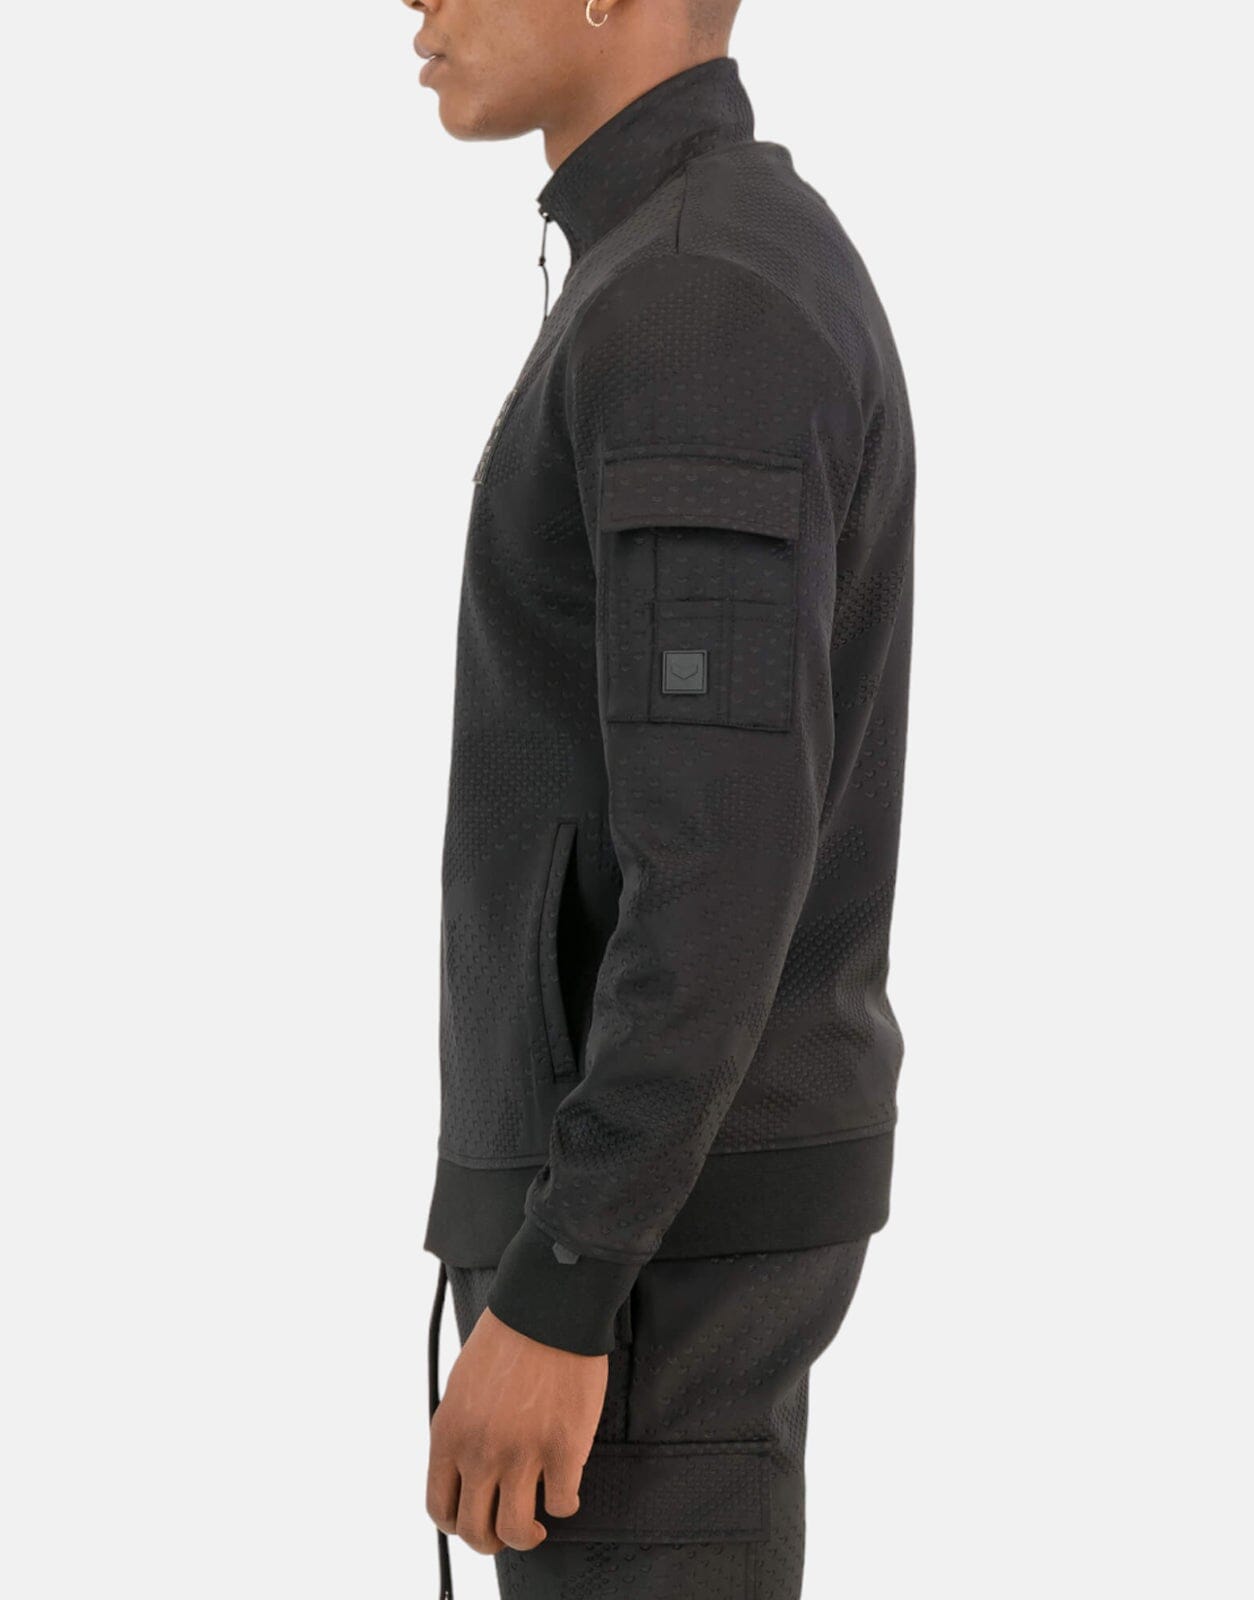 SPCC Spectra Black Jacket - Subwear